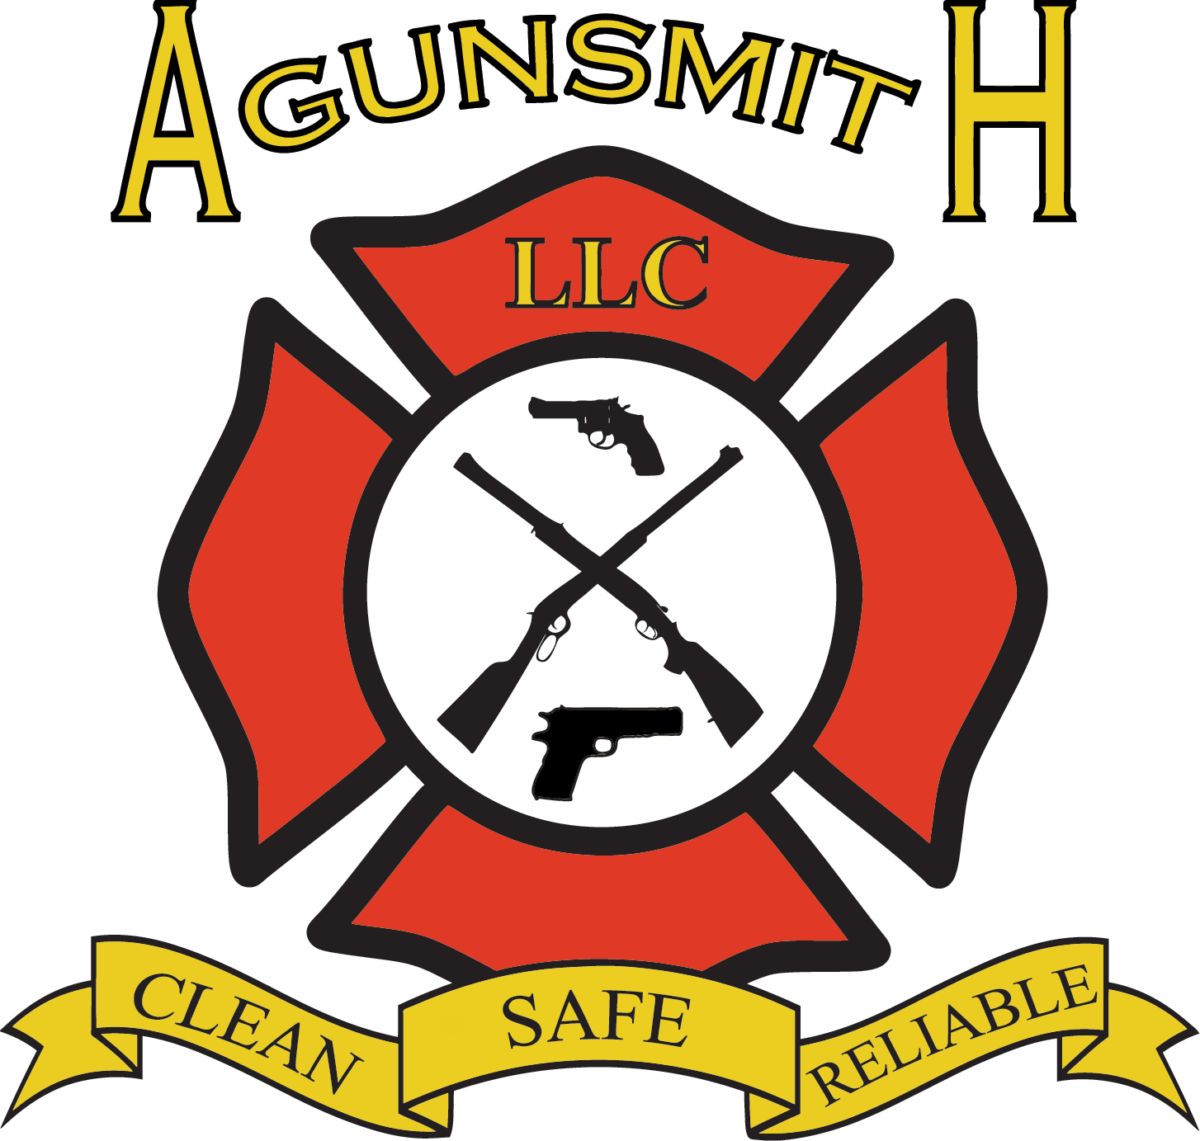 A-gunsmitH LLC